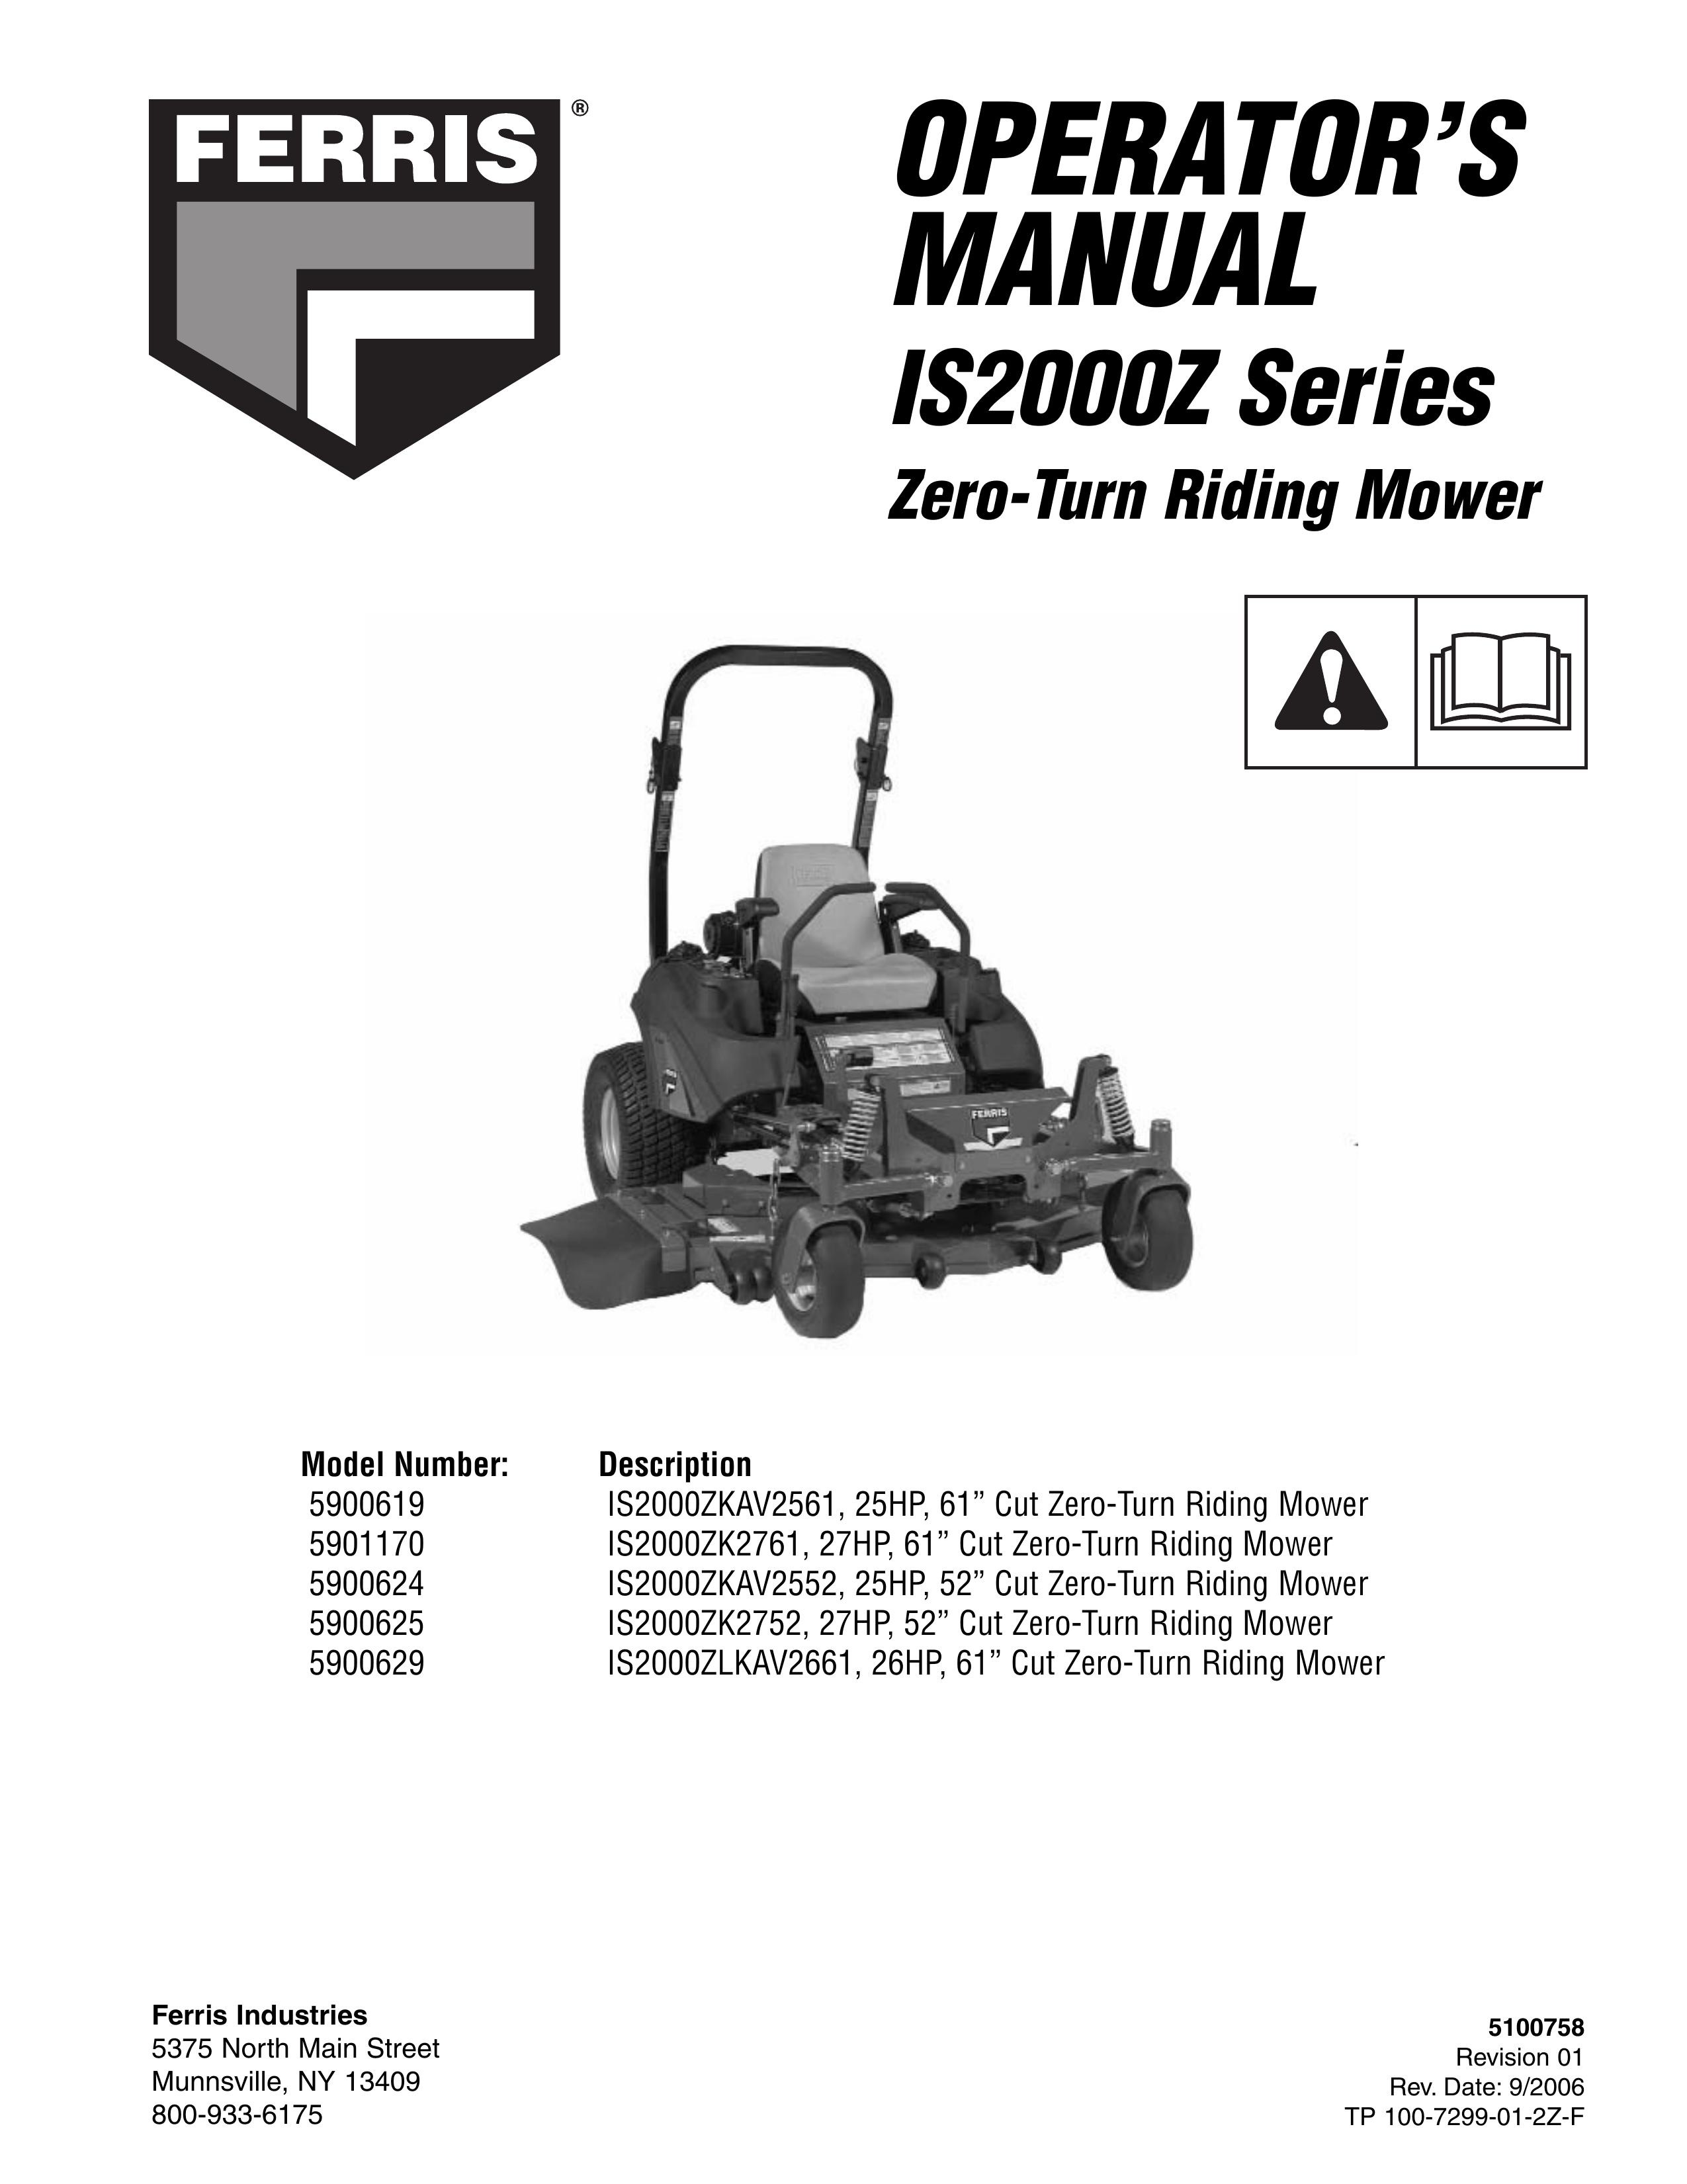 Ferris Industries 5900629 Lawn Mower User Manual